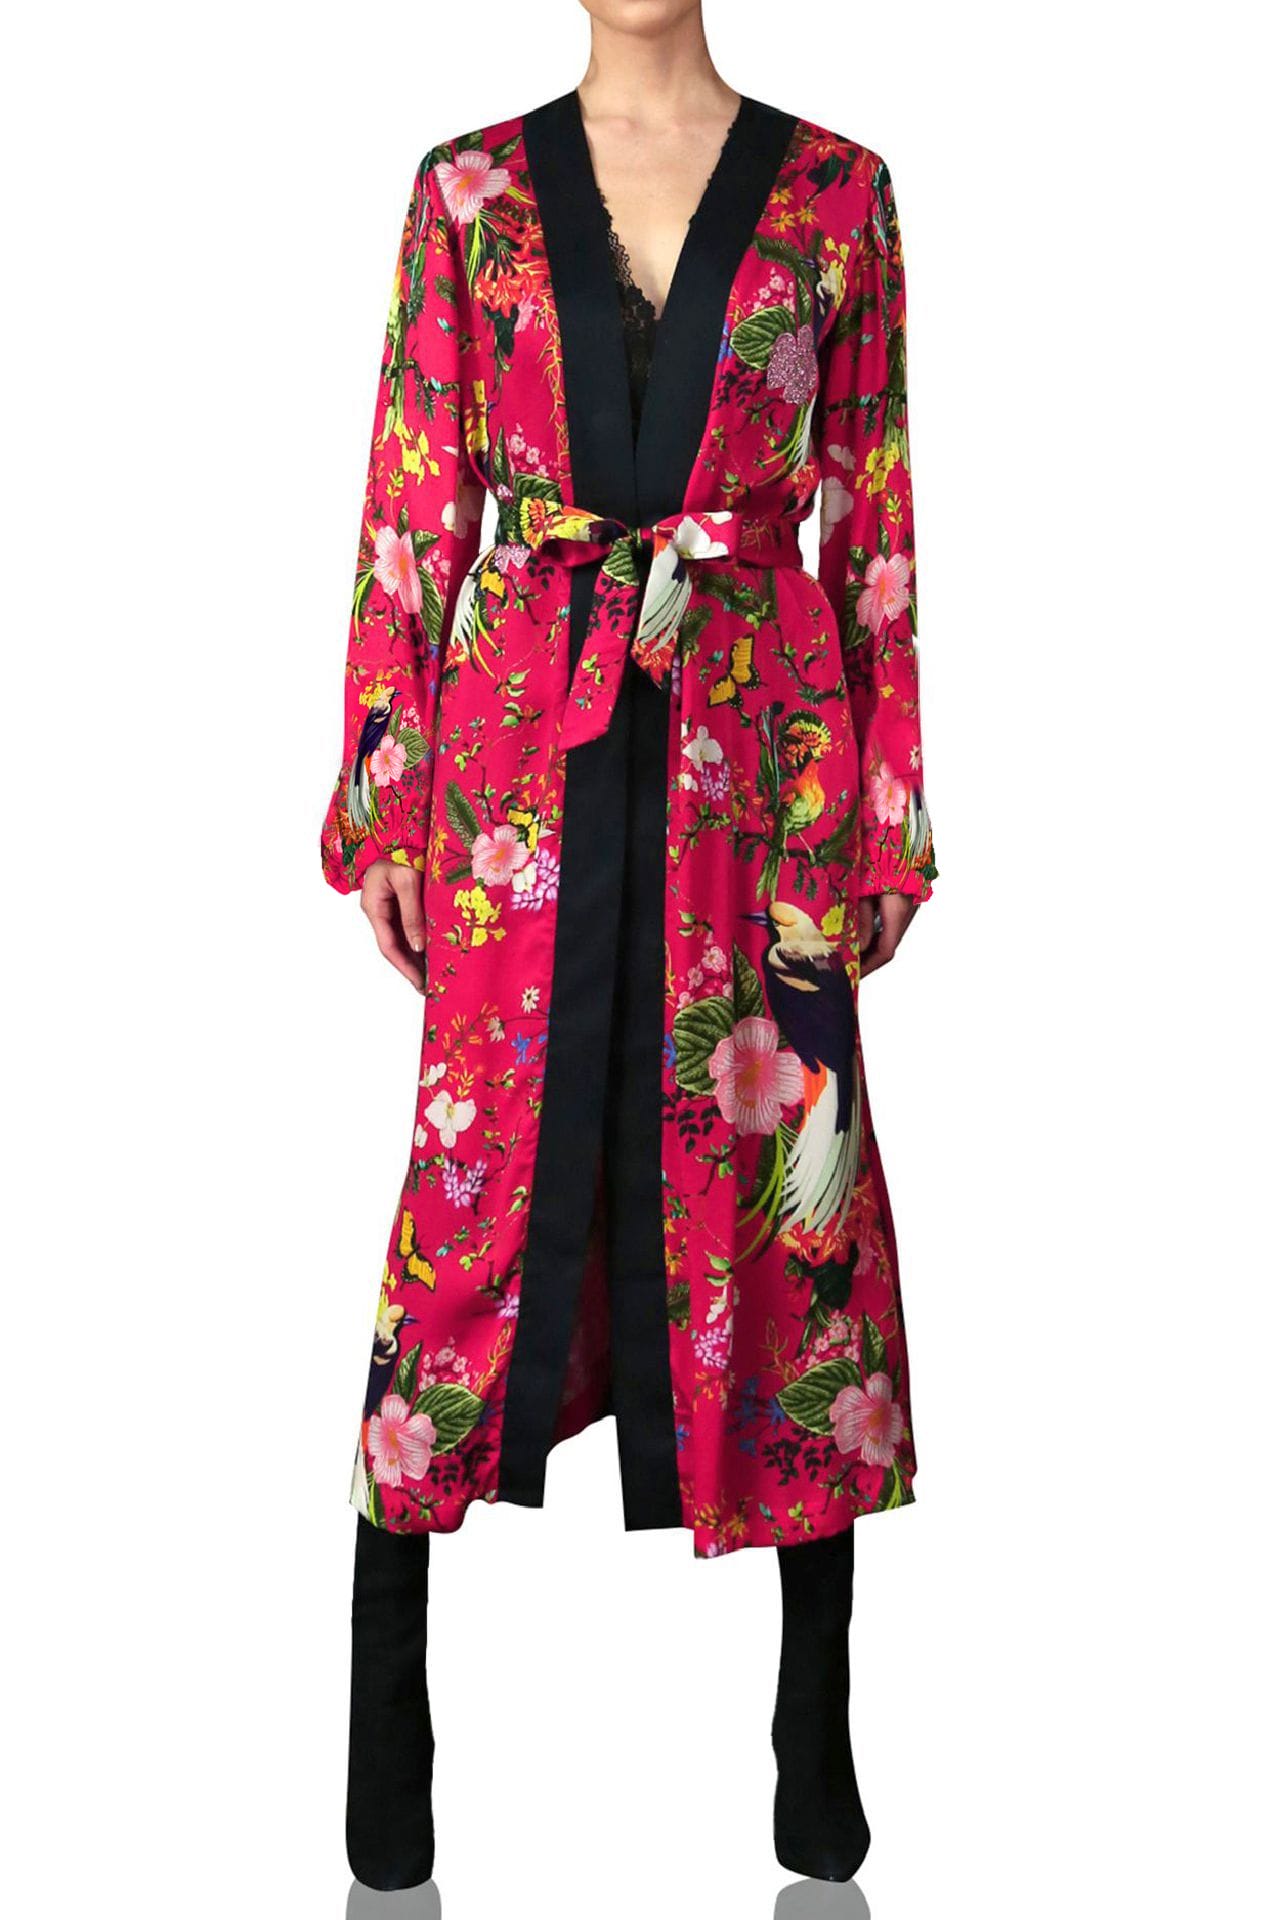 "Kyle X Shahida" "beautiful kimono" "printed silk robe" "robe dress silk" "designer silk robe"